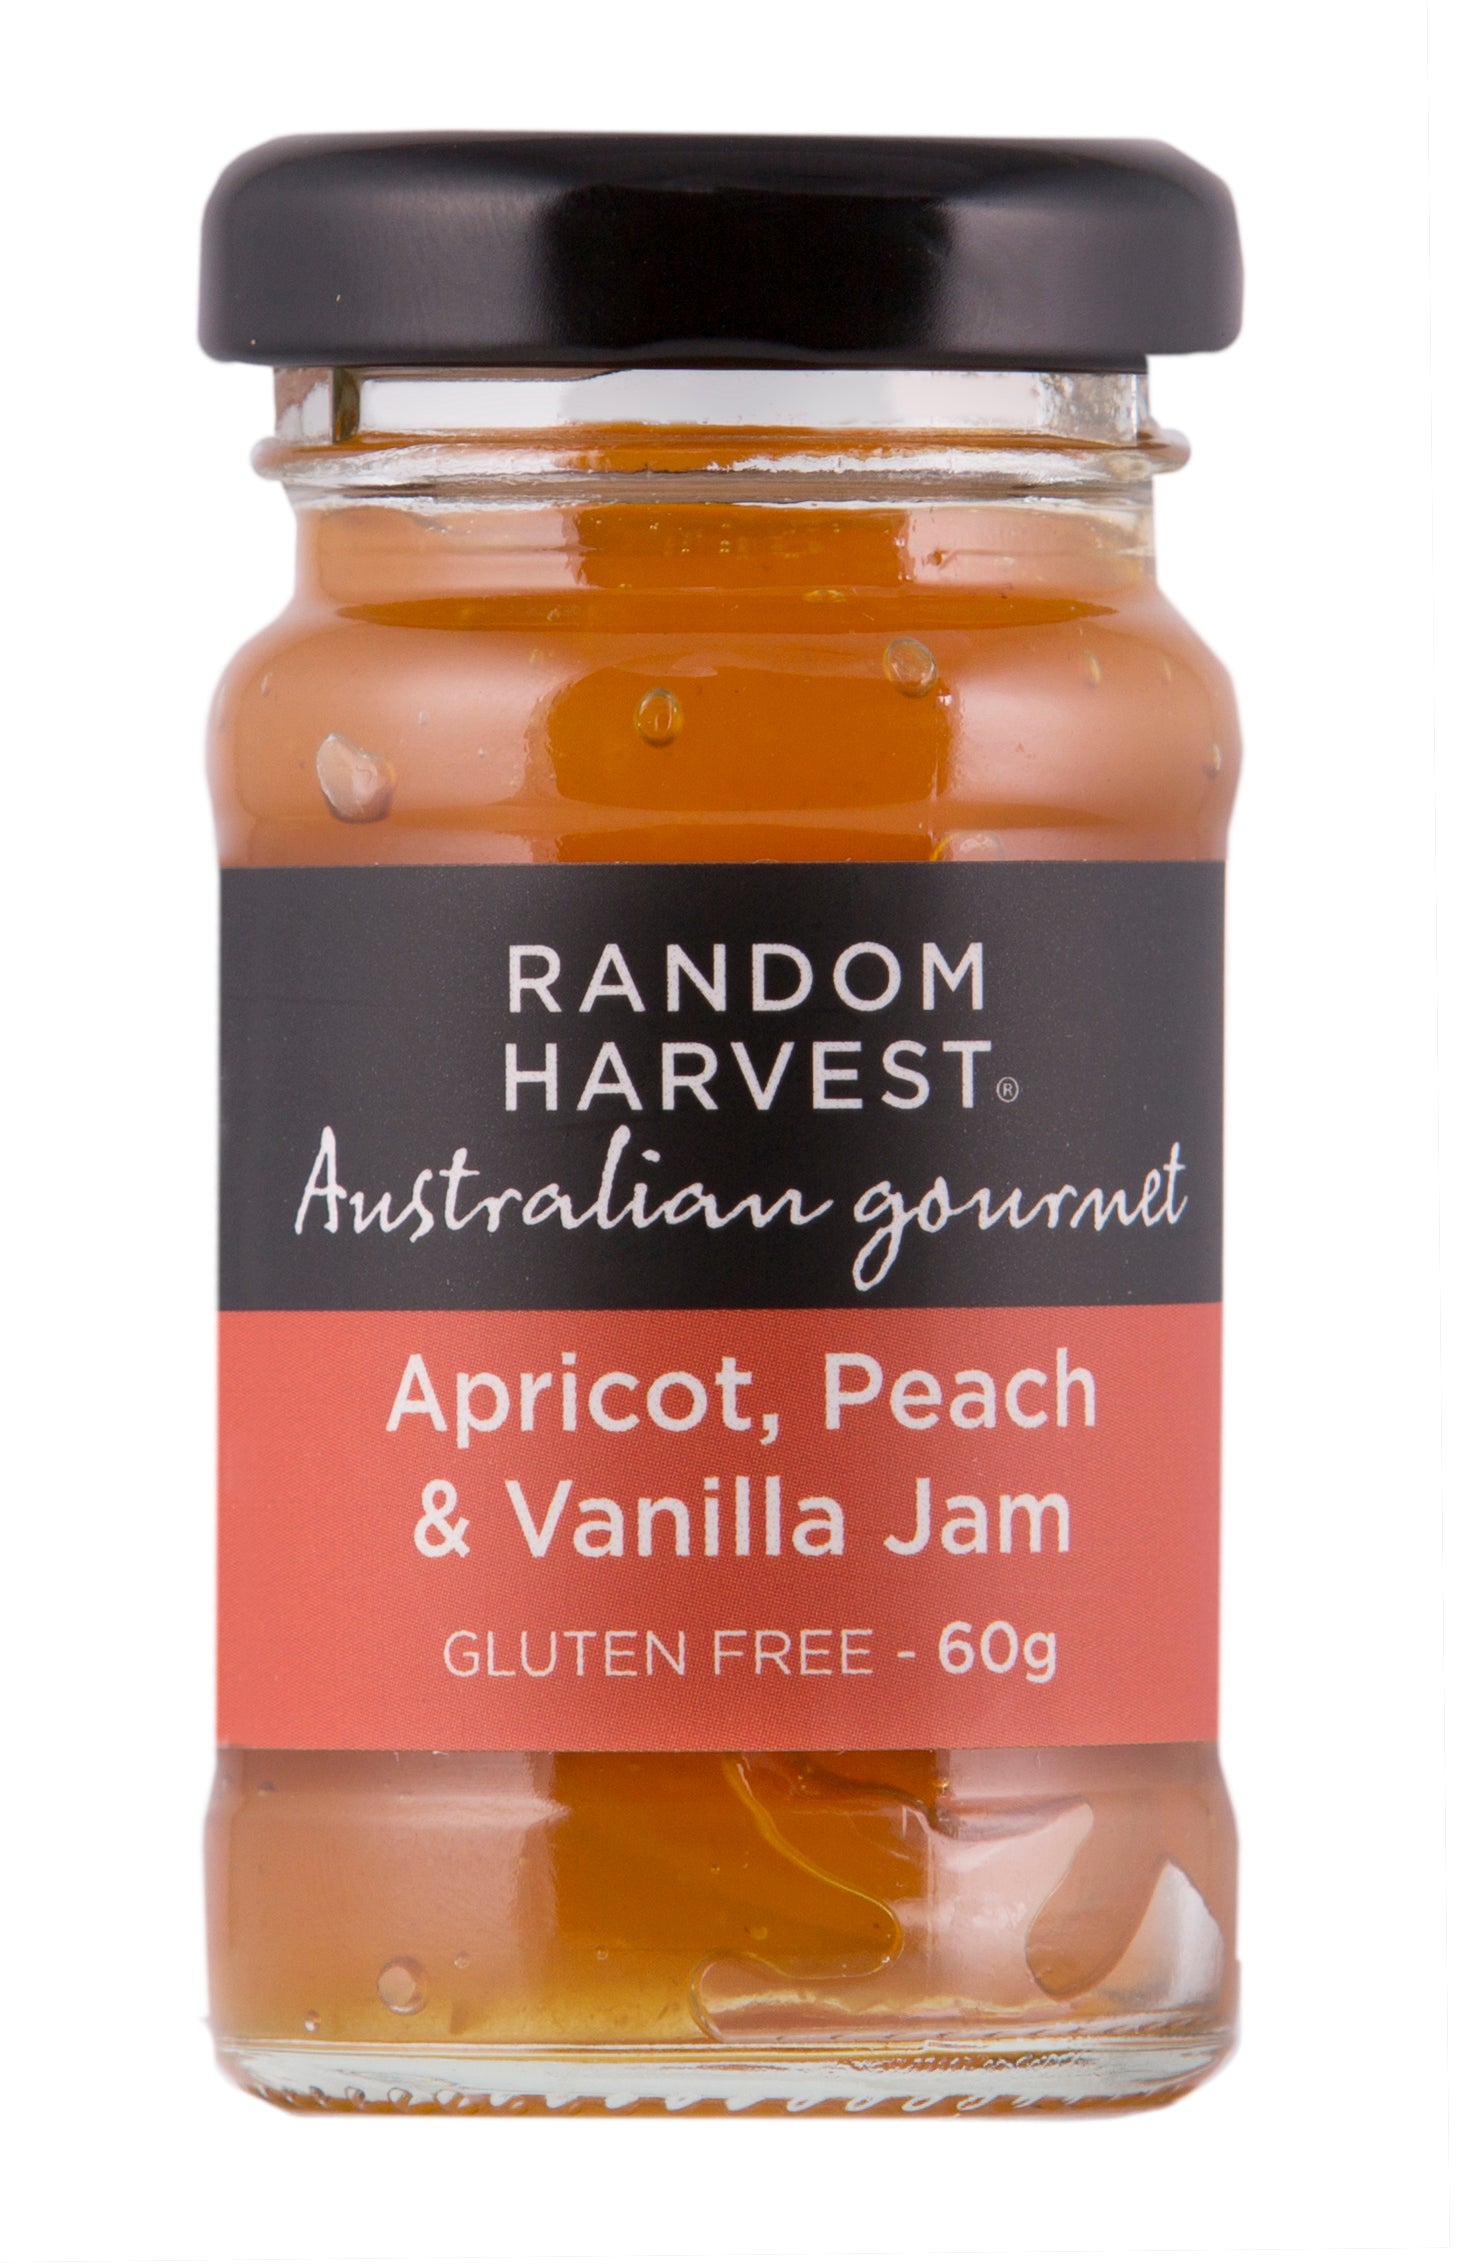 Apricot, Peach & Vanilla Jam